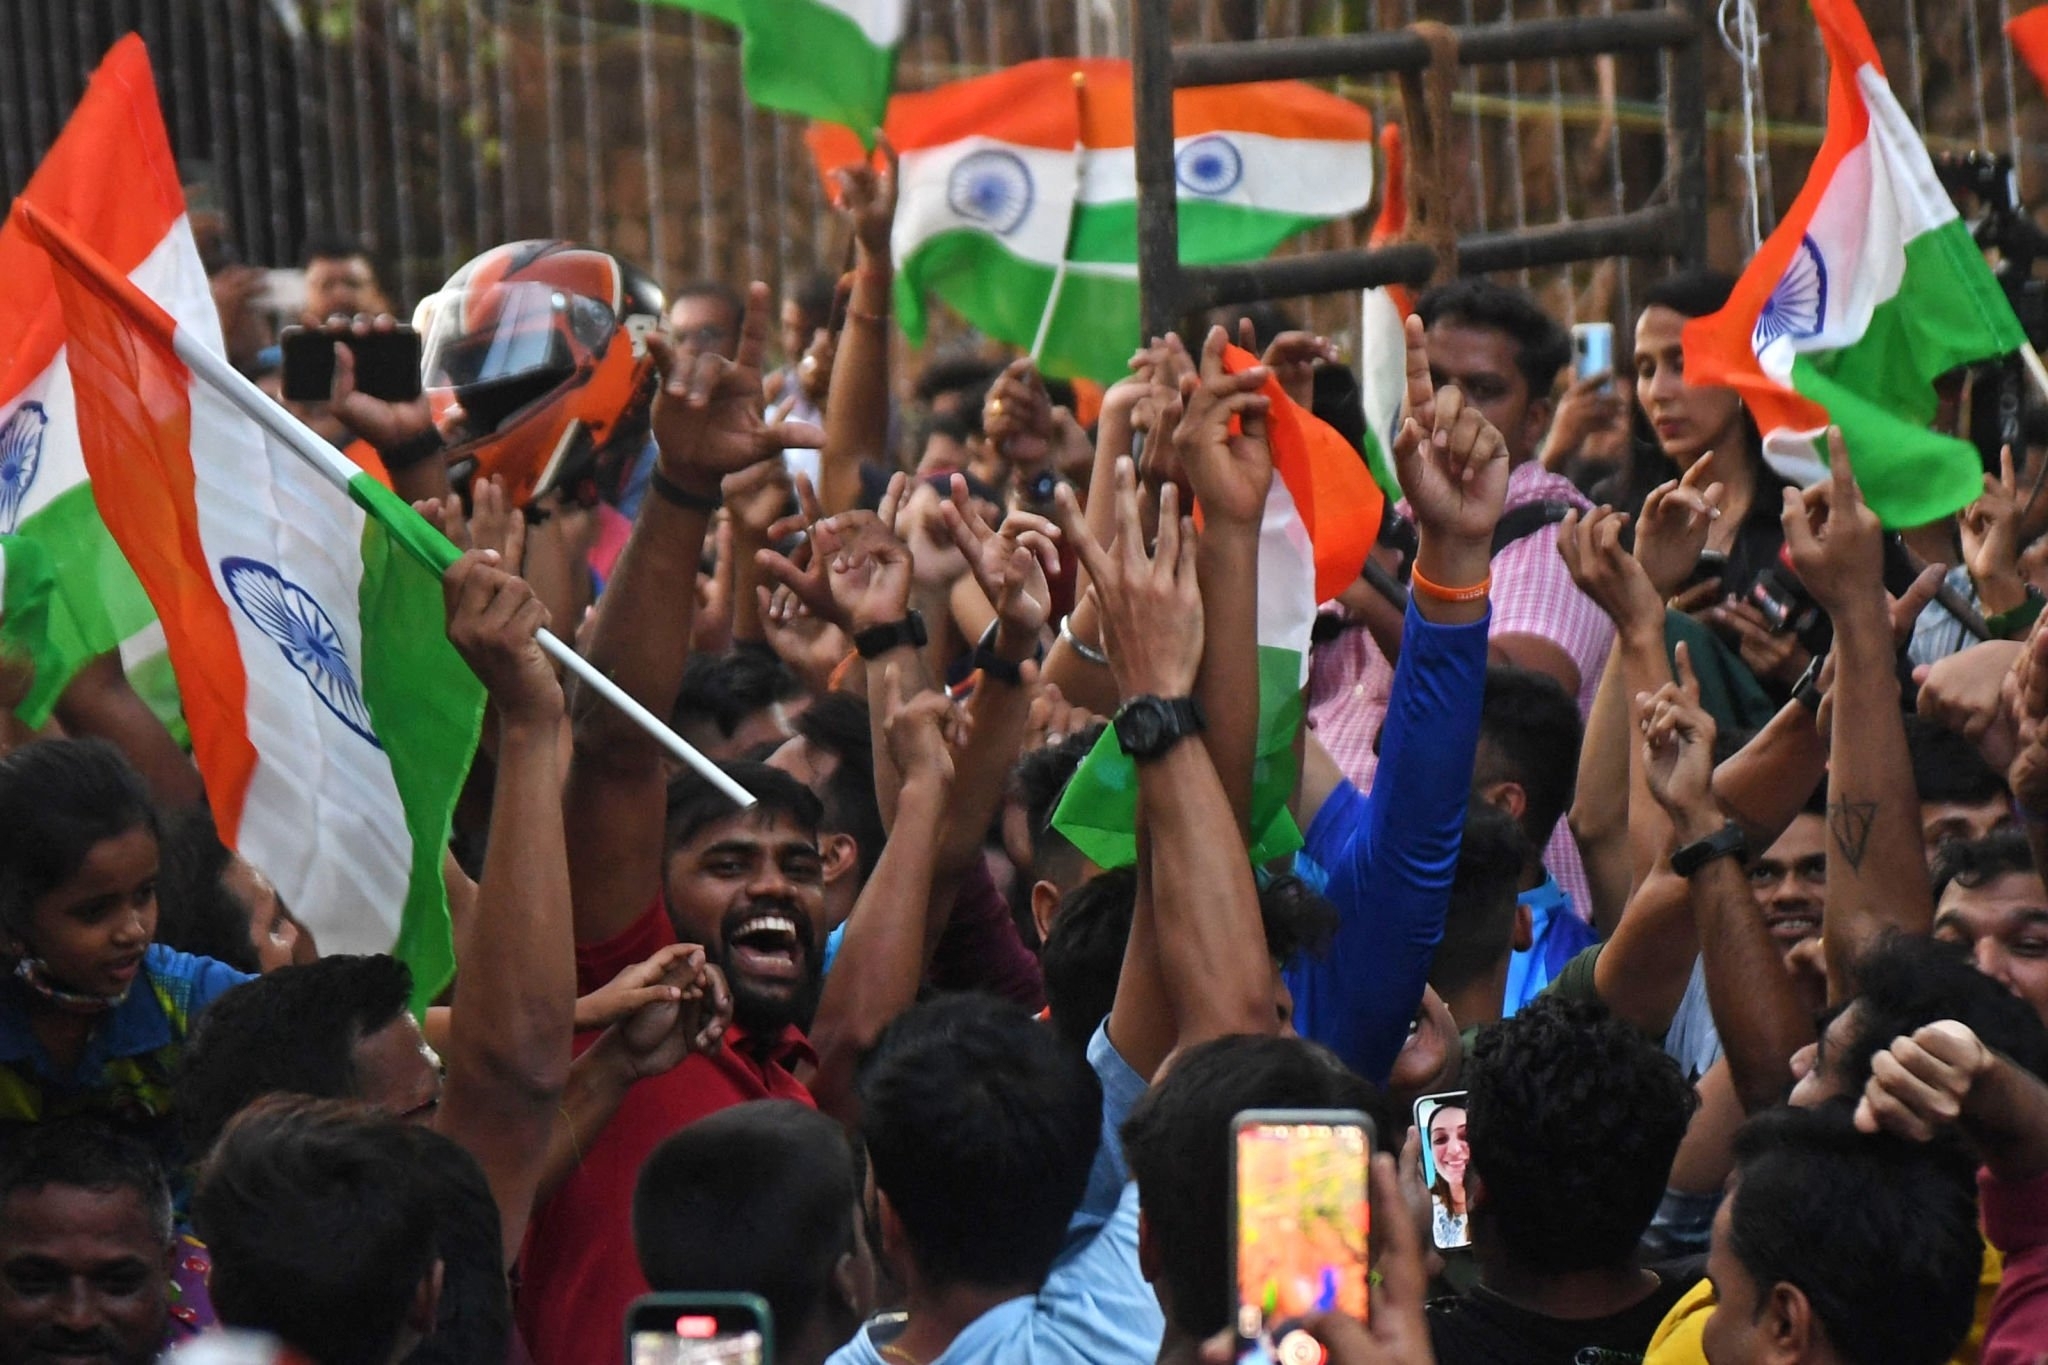 ICC T20 Wereldbeker 2022 Diwali-galadiner voor Team India Rahul Dravid Rohit Sharma Virat Kohli IND vs PAK Celebration IND vs NED LIVE India vs Nederland